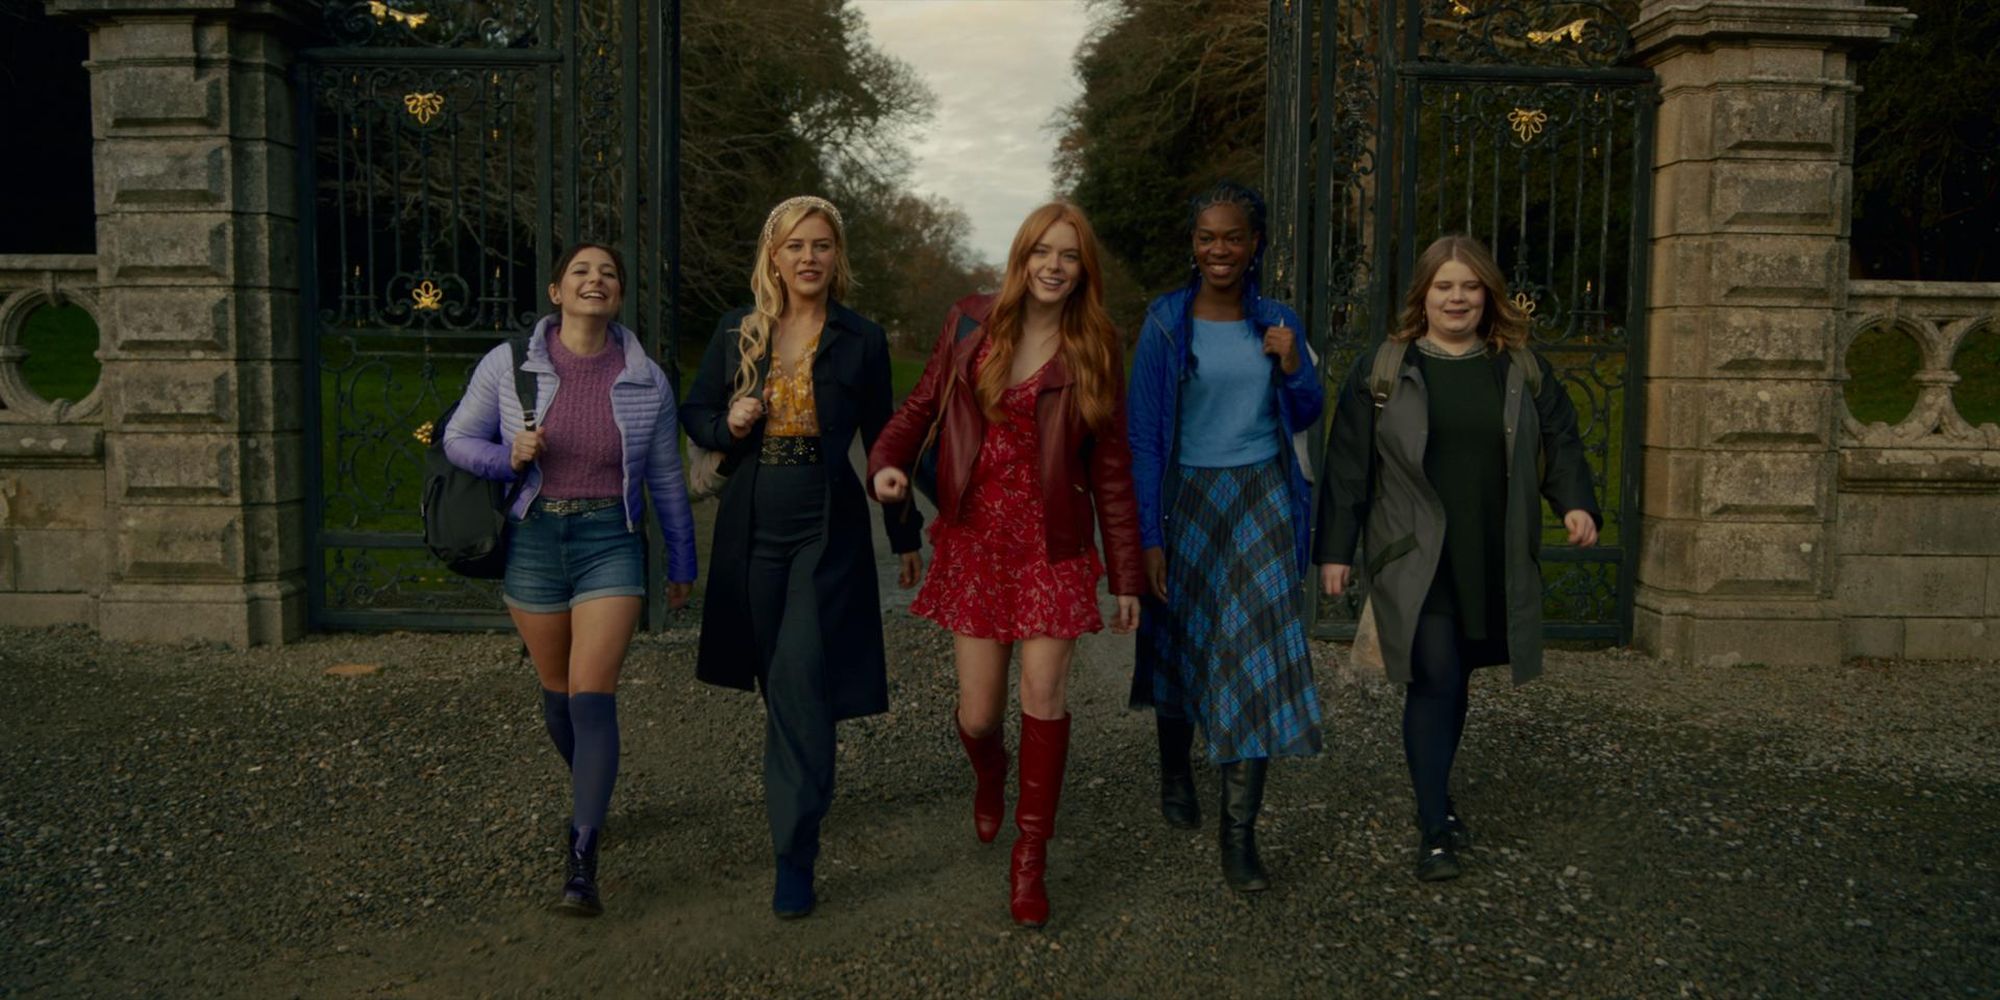 Fate The Winx Saga: uscita su Netflix, cast e trama